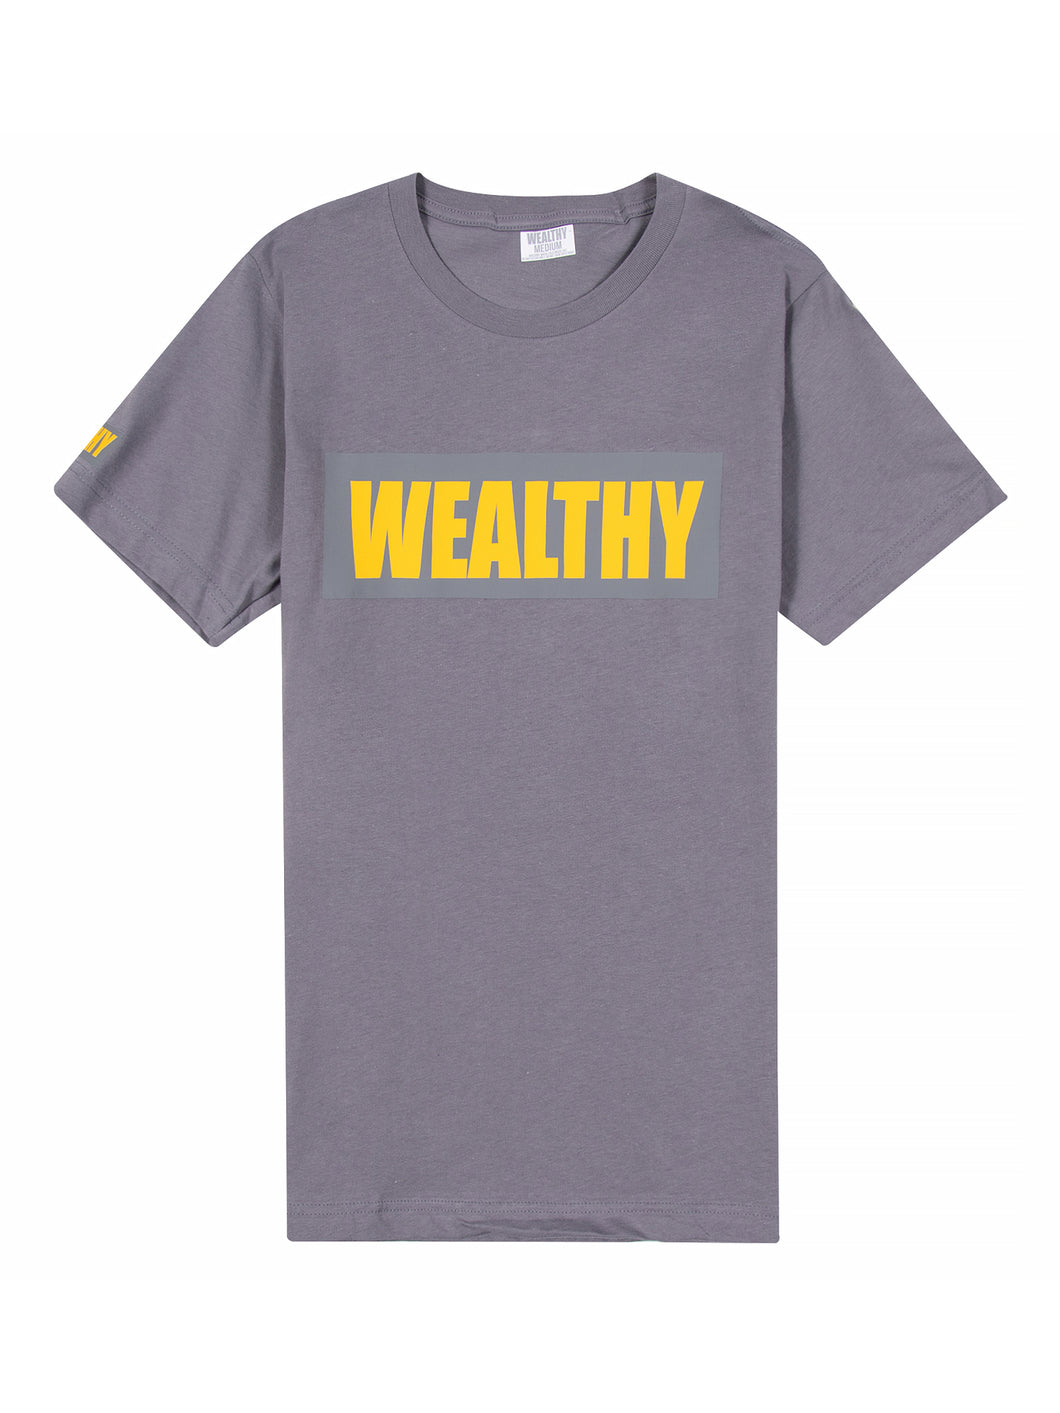 Wealthy Tee (Grey/Grey/Yellow)